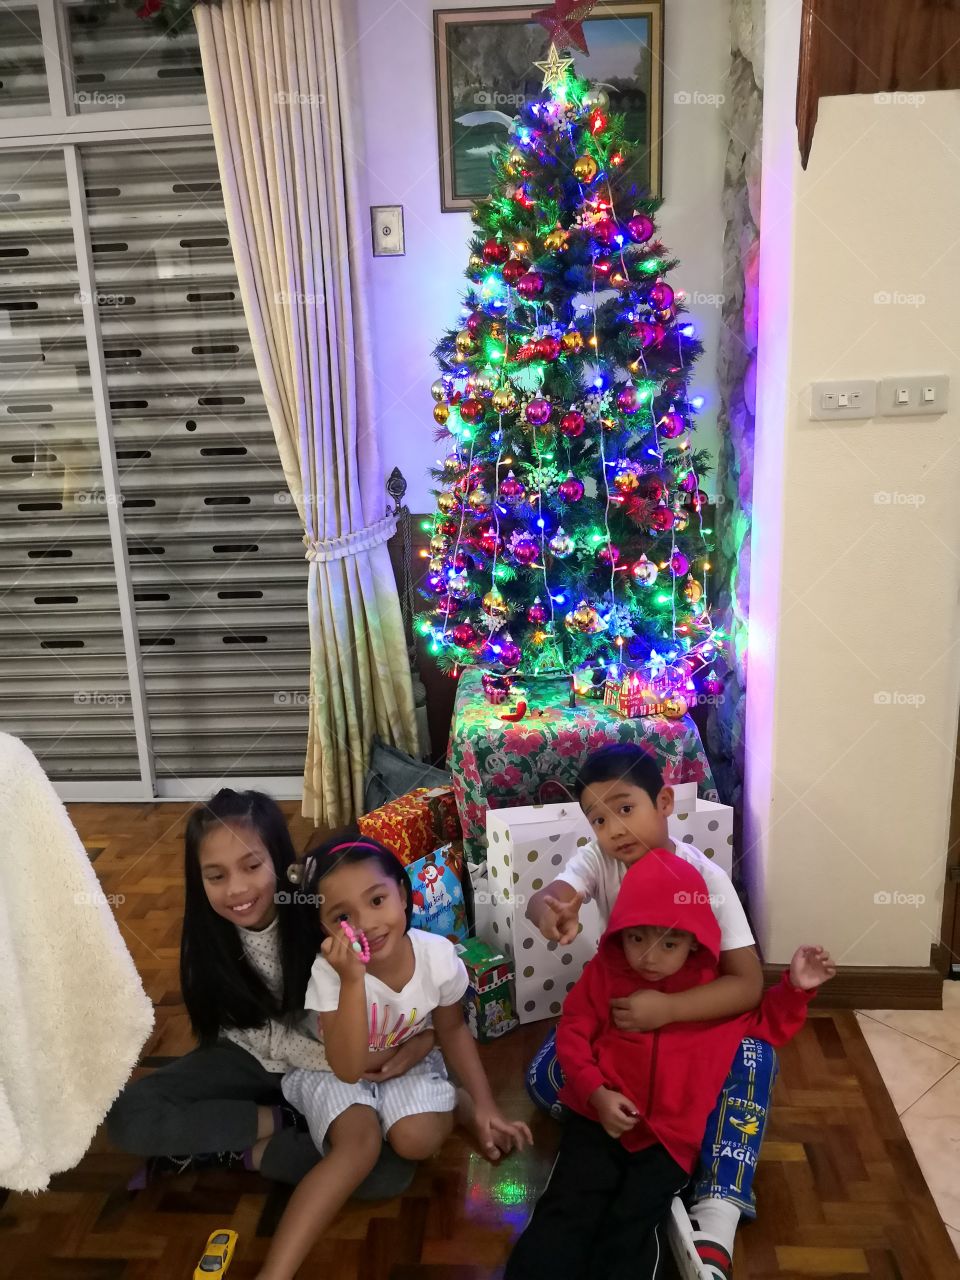 children under the Christmas tree